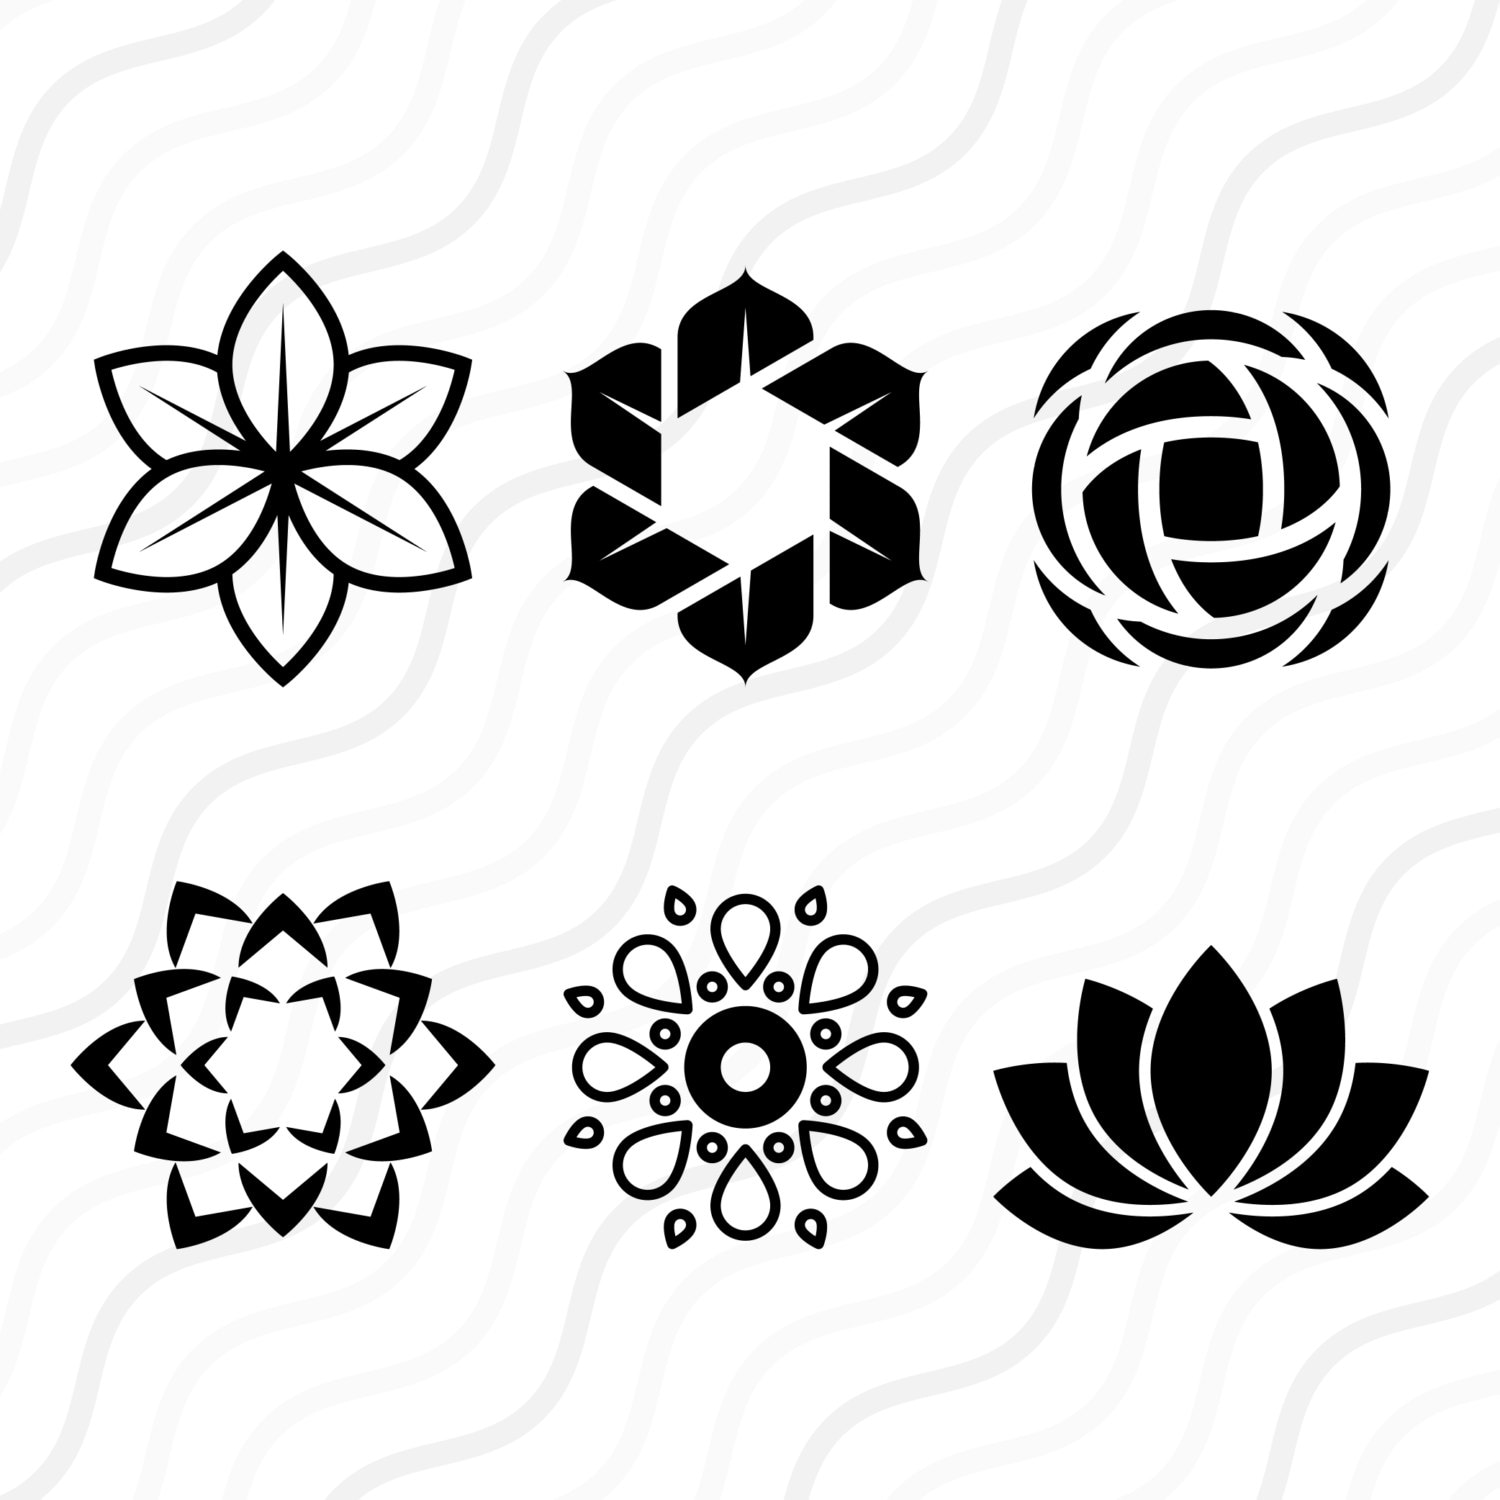 Download Flower SVGFlower Silhouette SVG Lotus Flower SVG Cut table